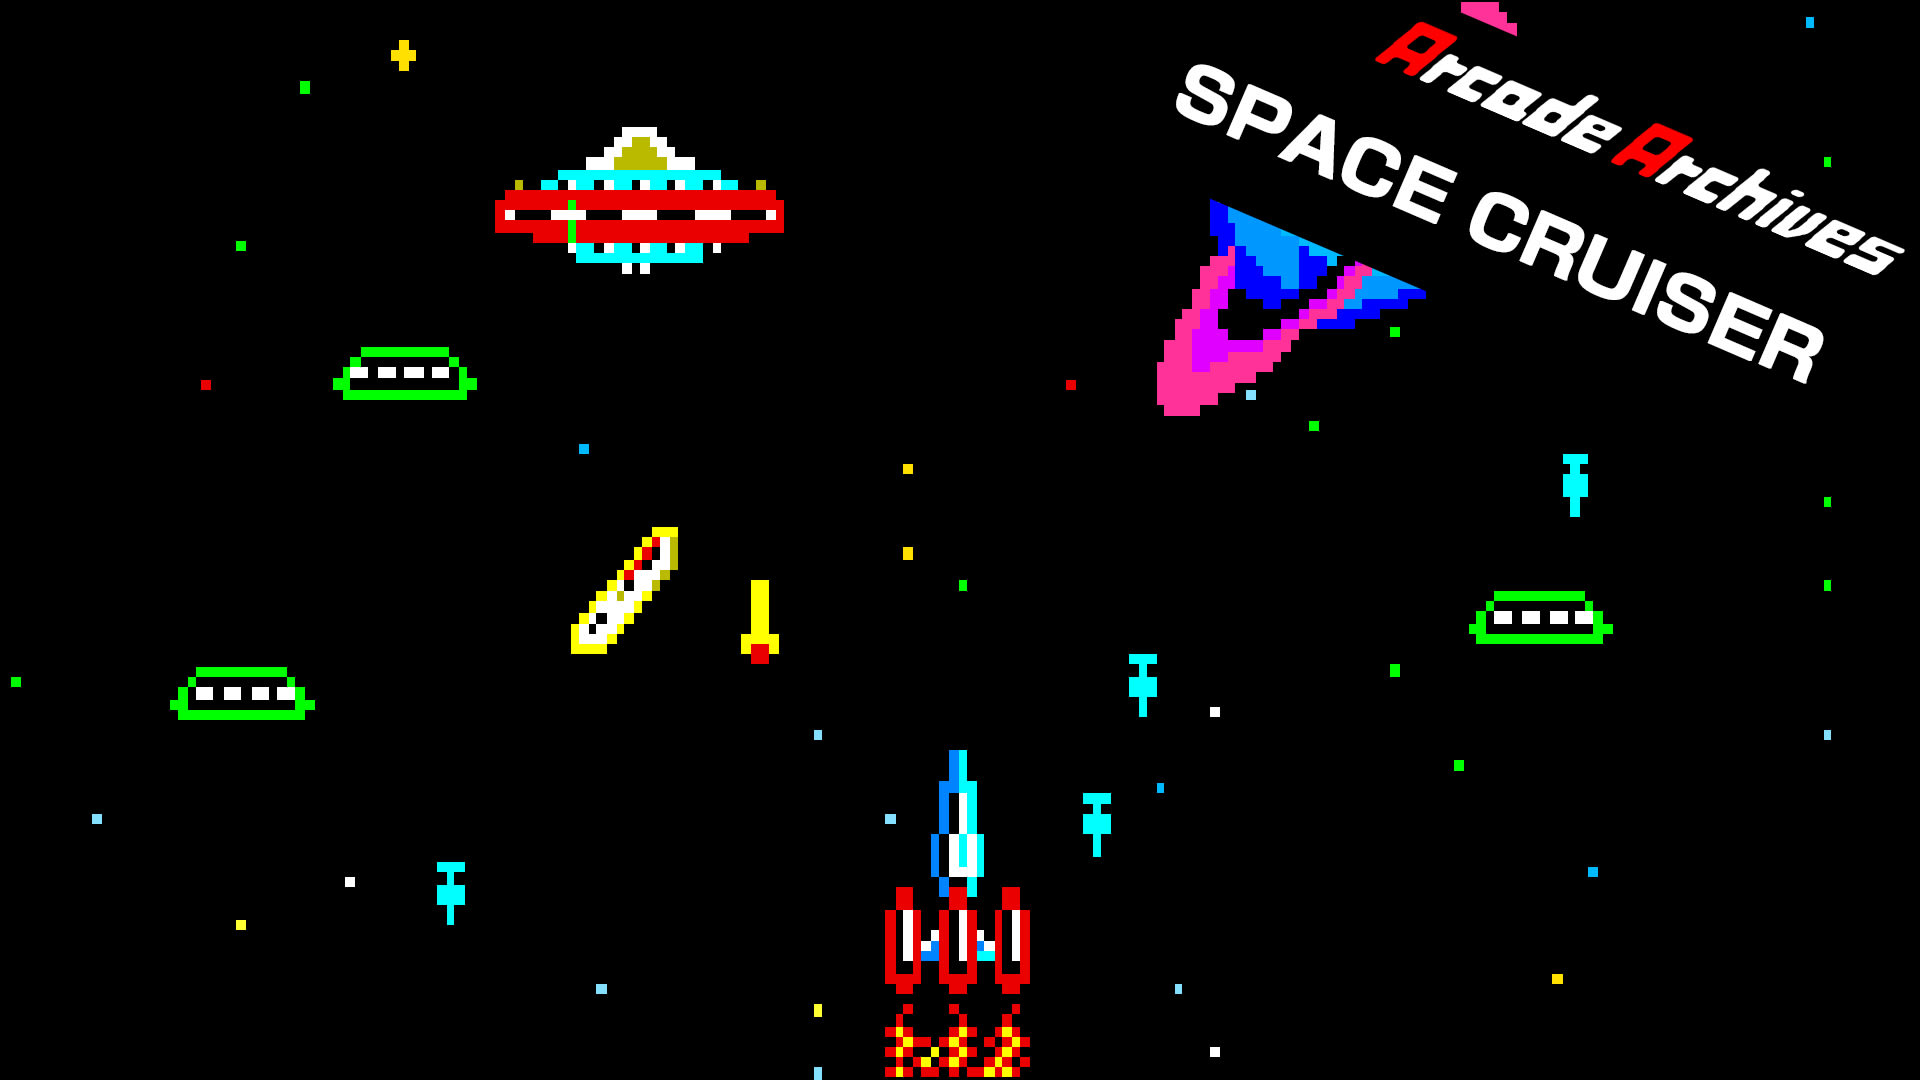 Arcade Archives SPACE CRUISER